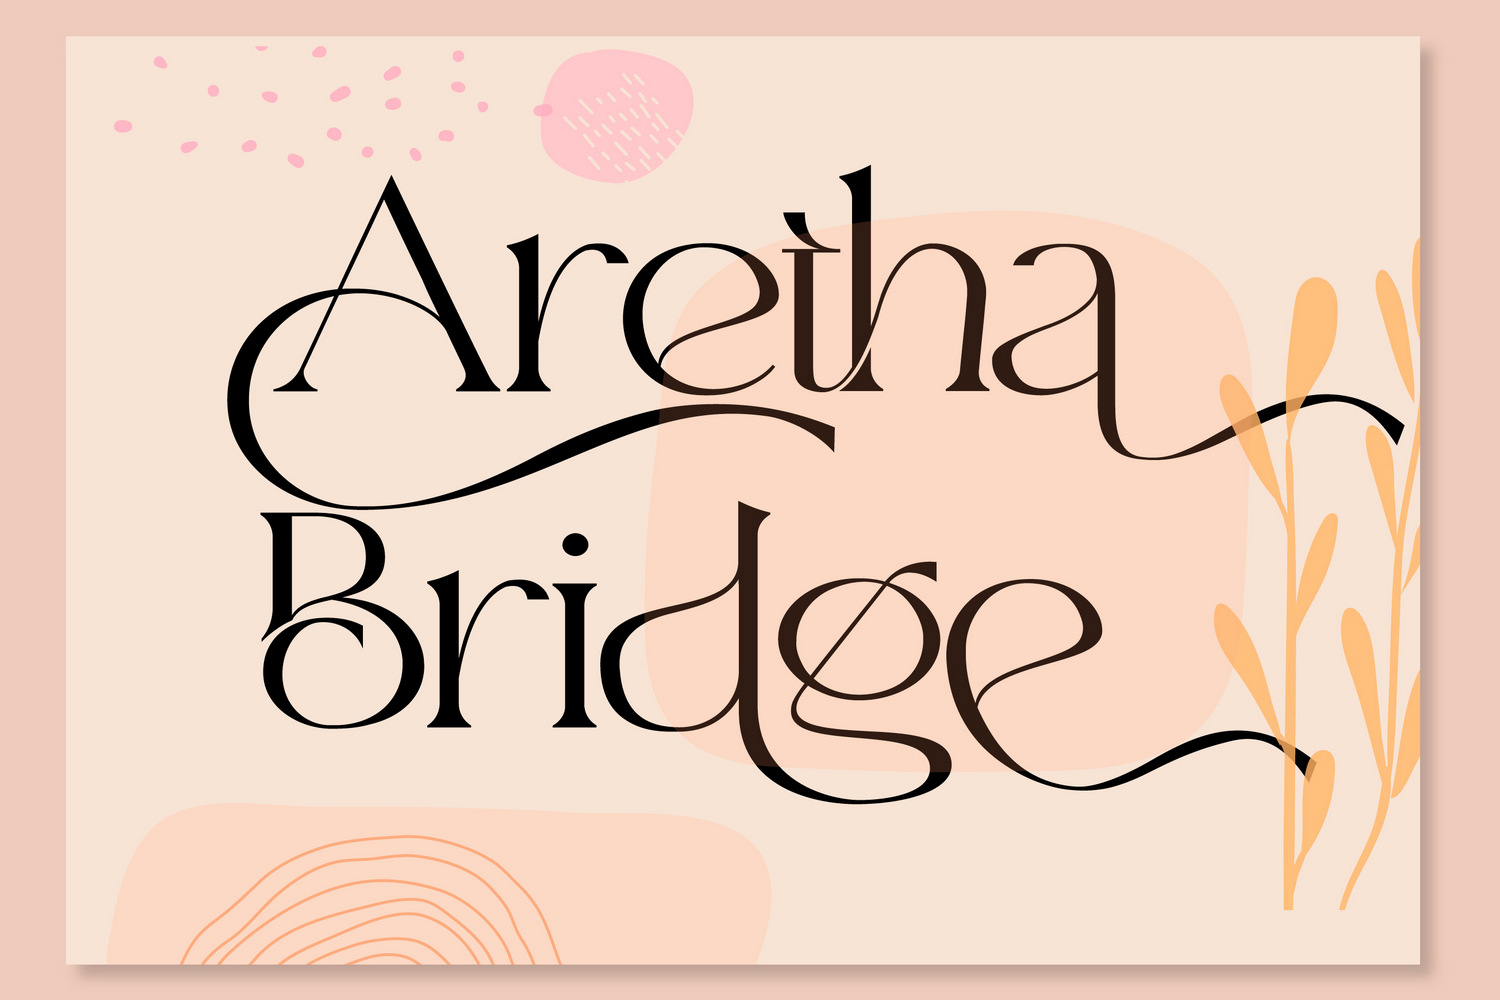 Aretha Bridge